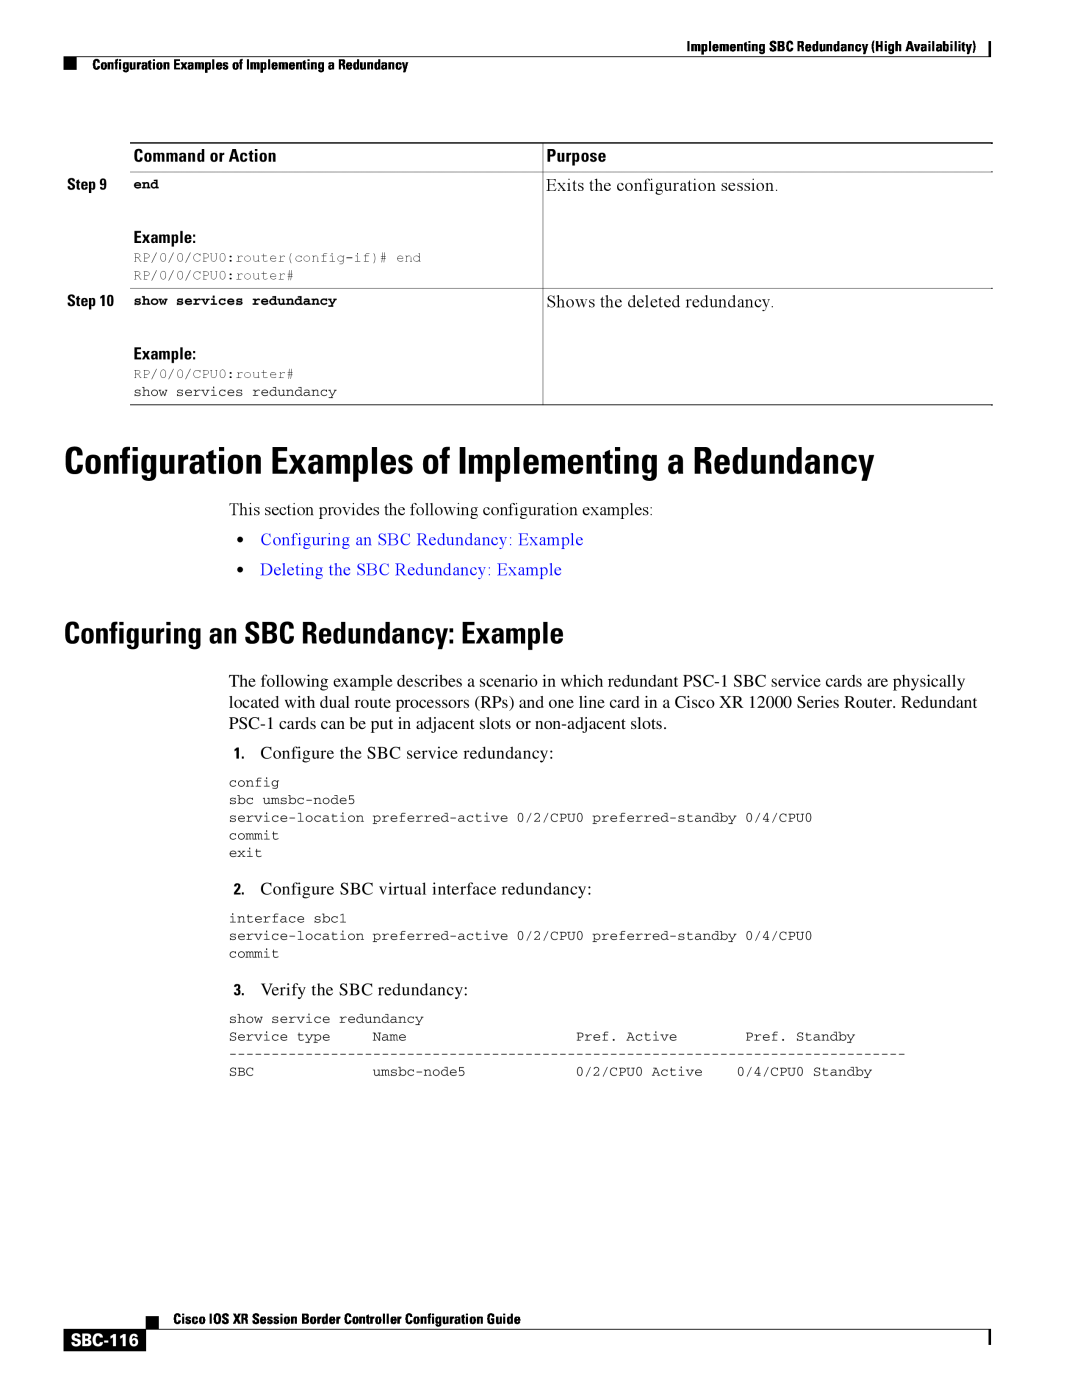 Cisco Systems SBC-111 Configuration Examples of Implementing a Redundancy, Configuring an SBC Redundancy Example, SBC-116 